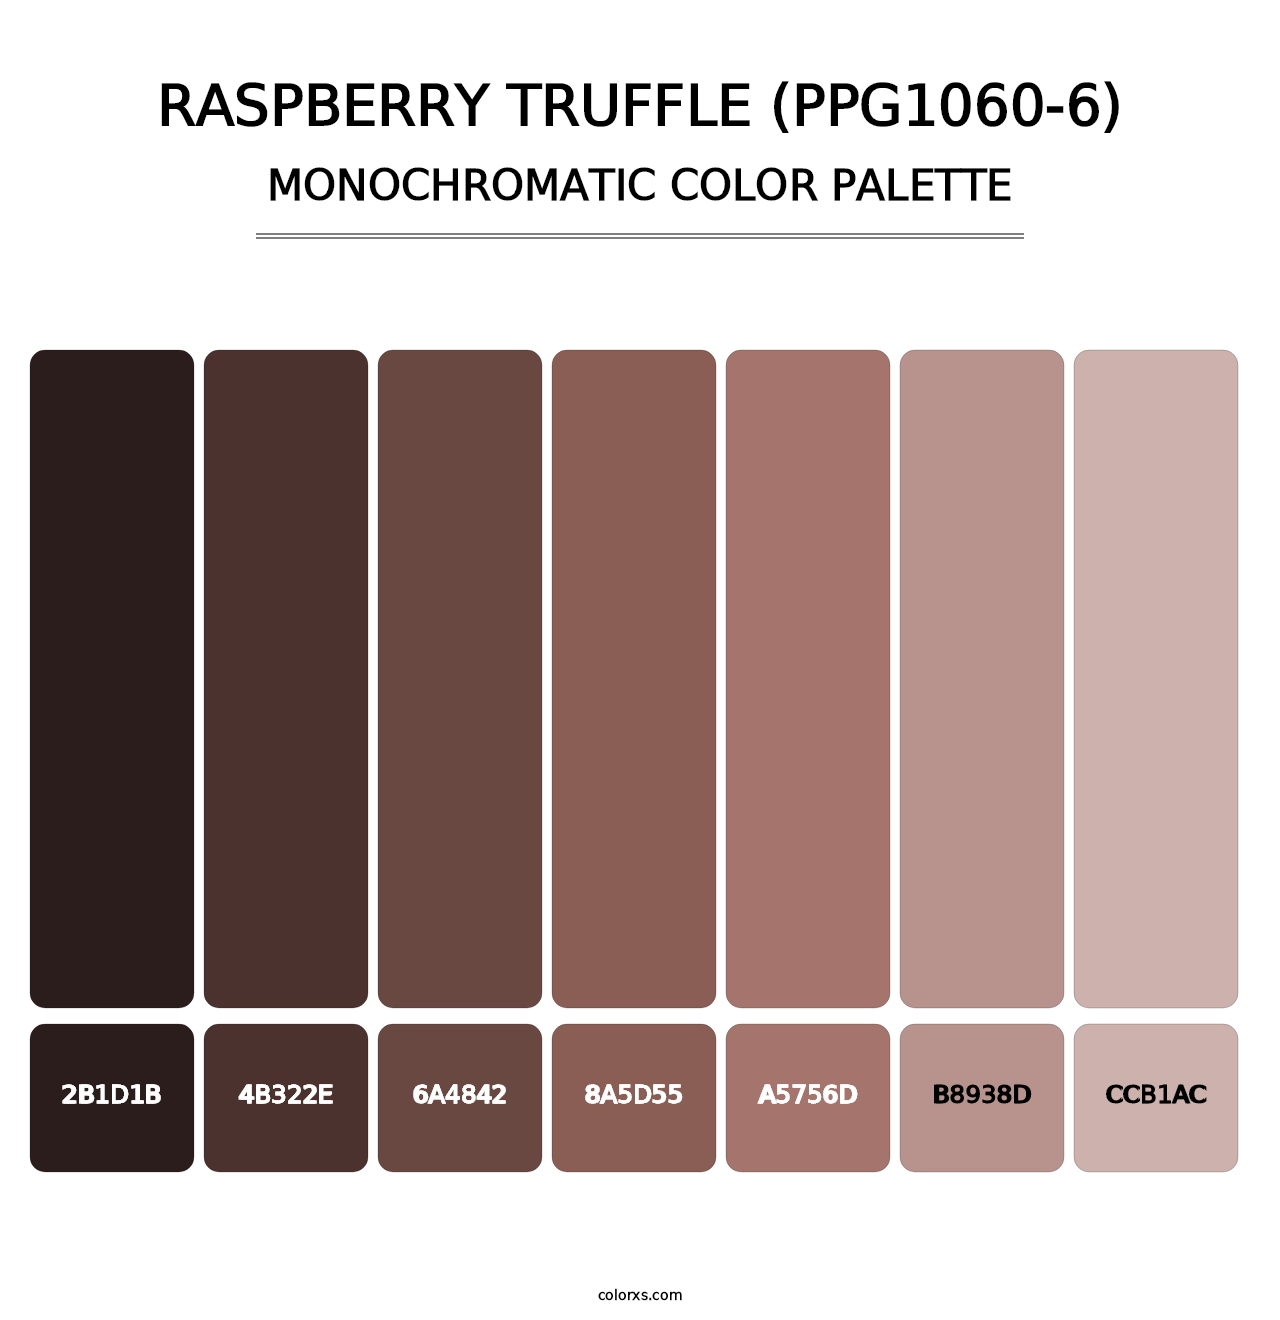 Raspberry Truffle (PPG1060-6) - Monochromatic Color Palette